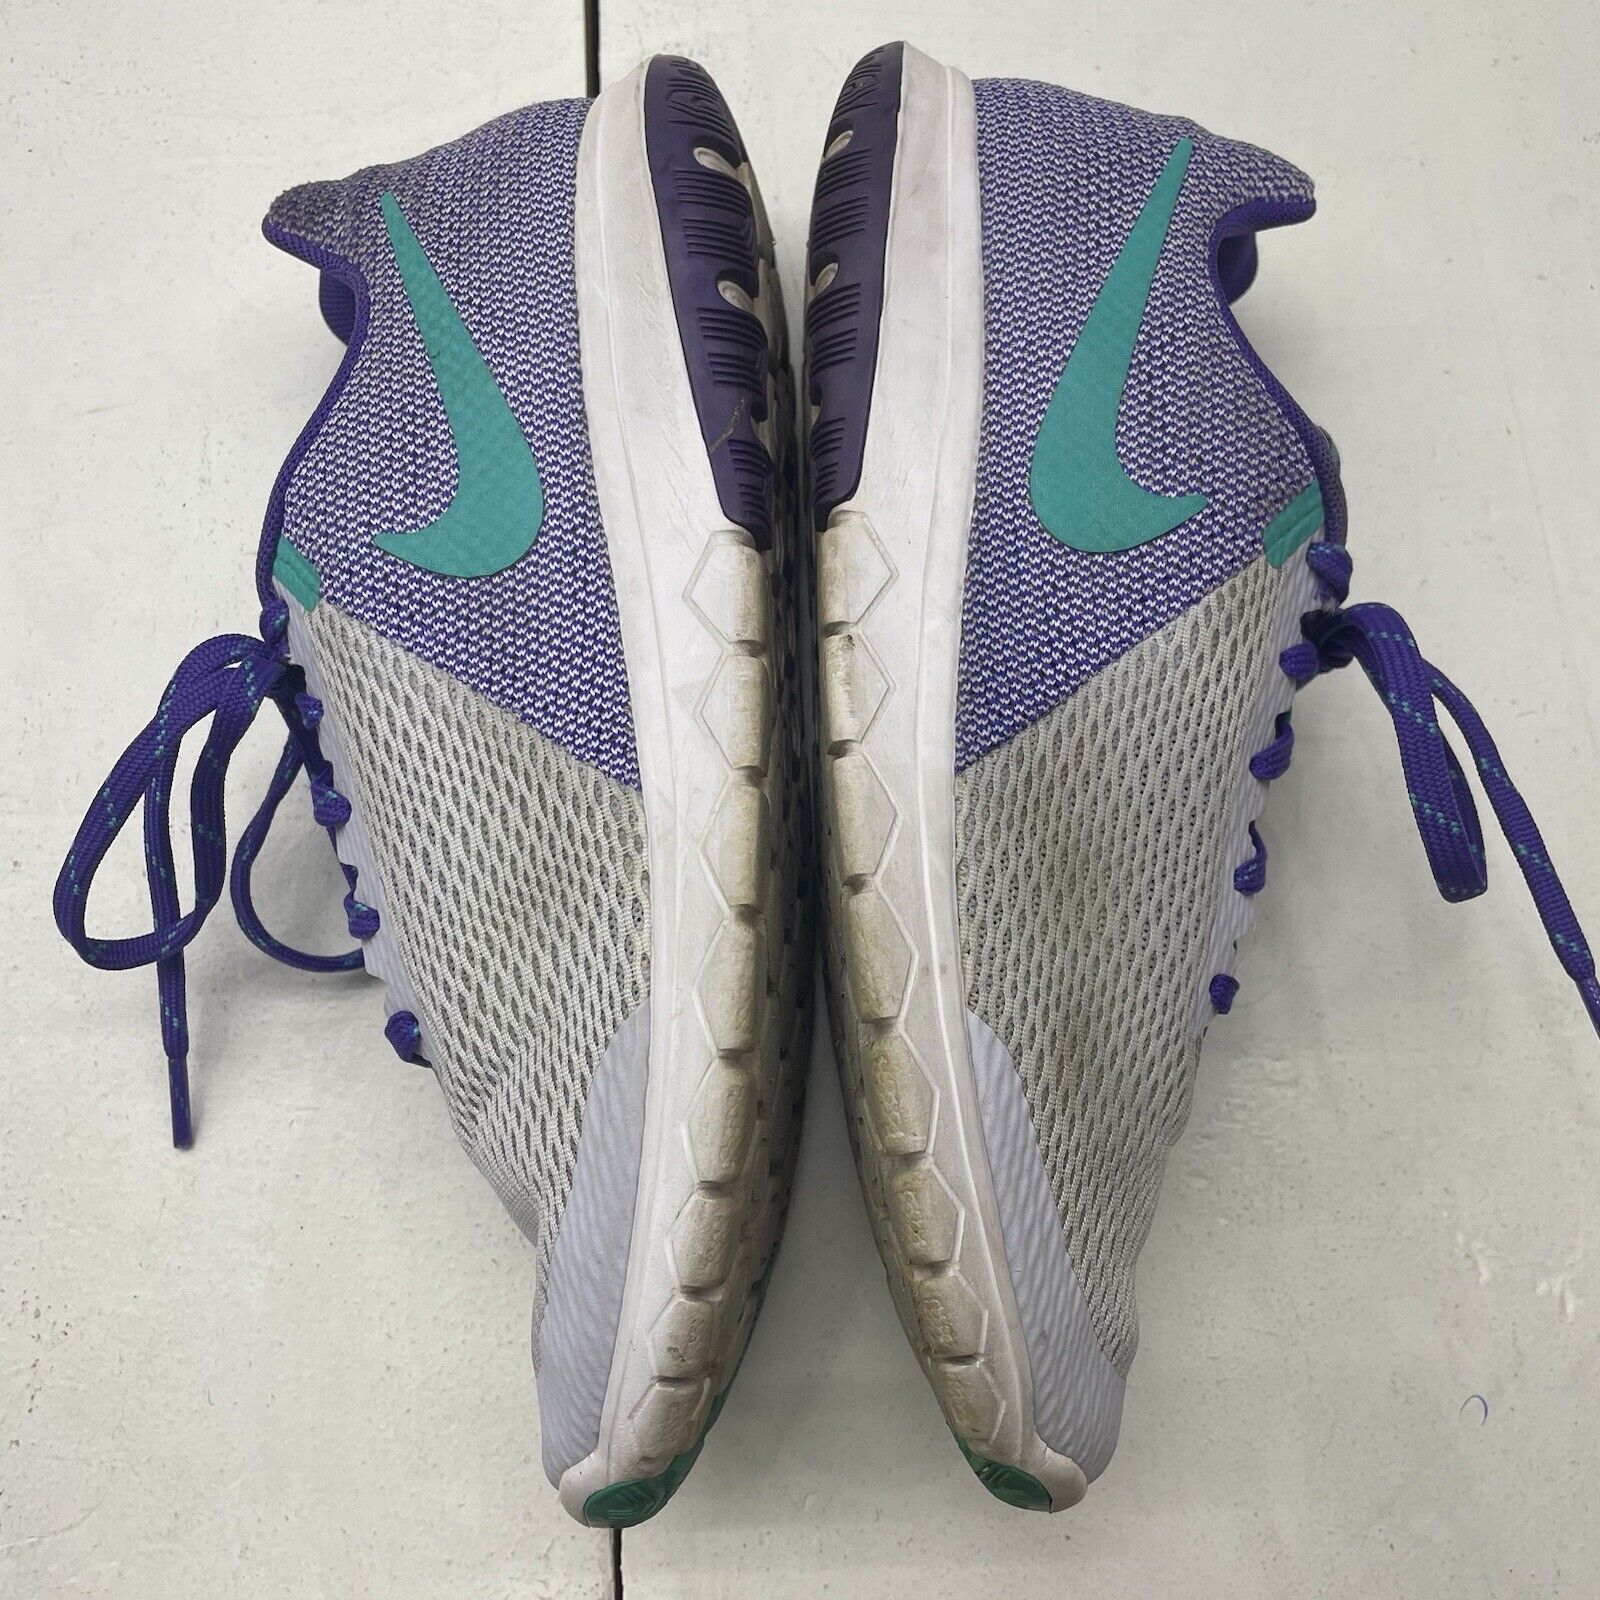 Nike Flex Experience RN Purple White Aqua Running Shoes Wome - beyond exchange